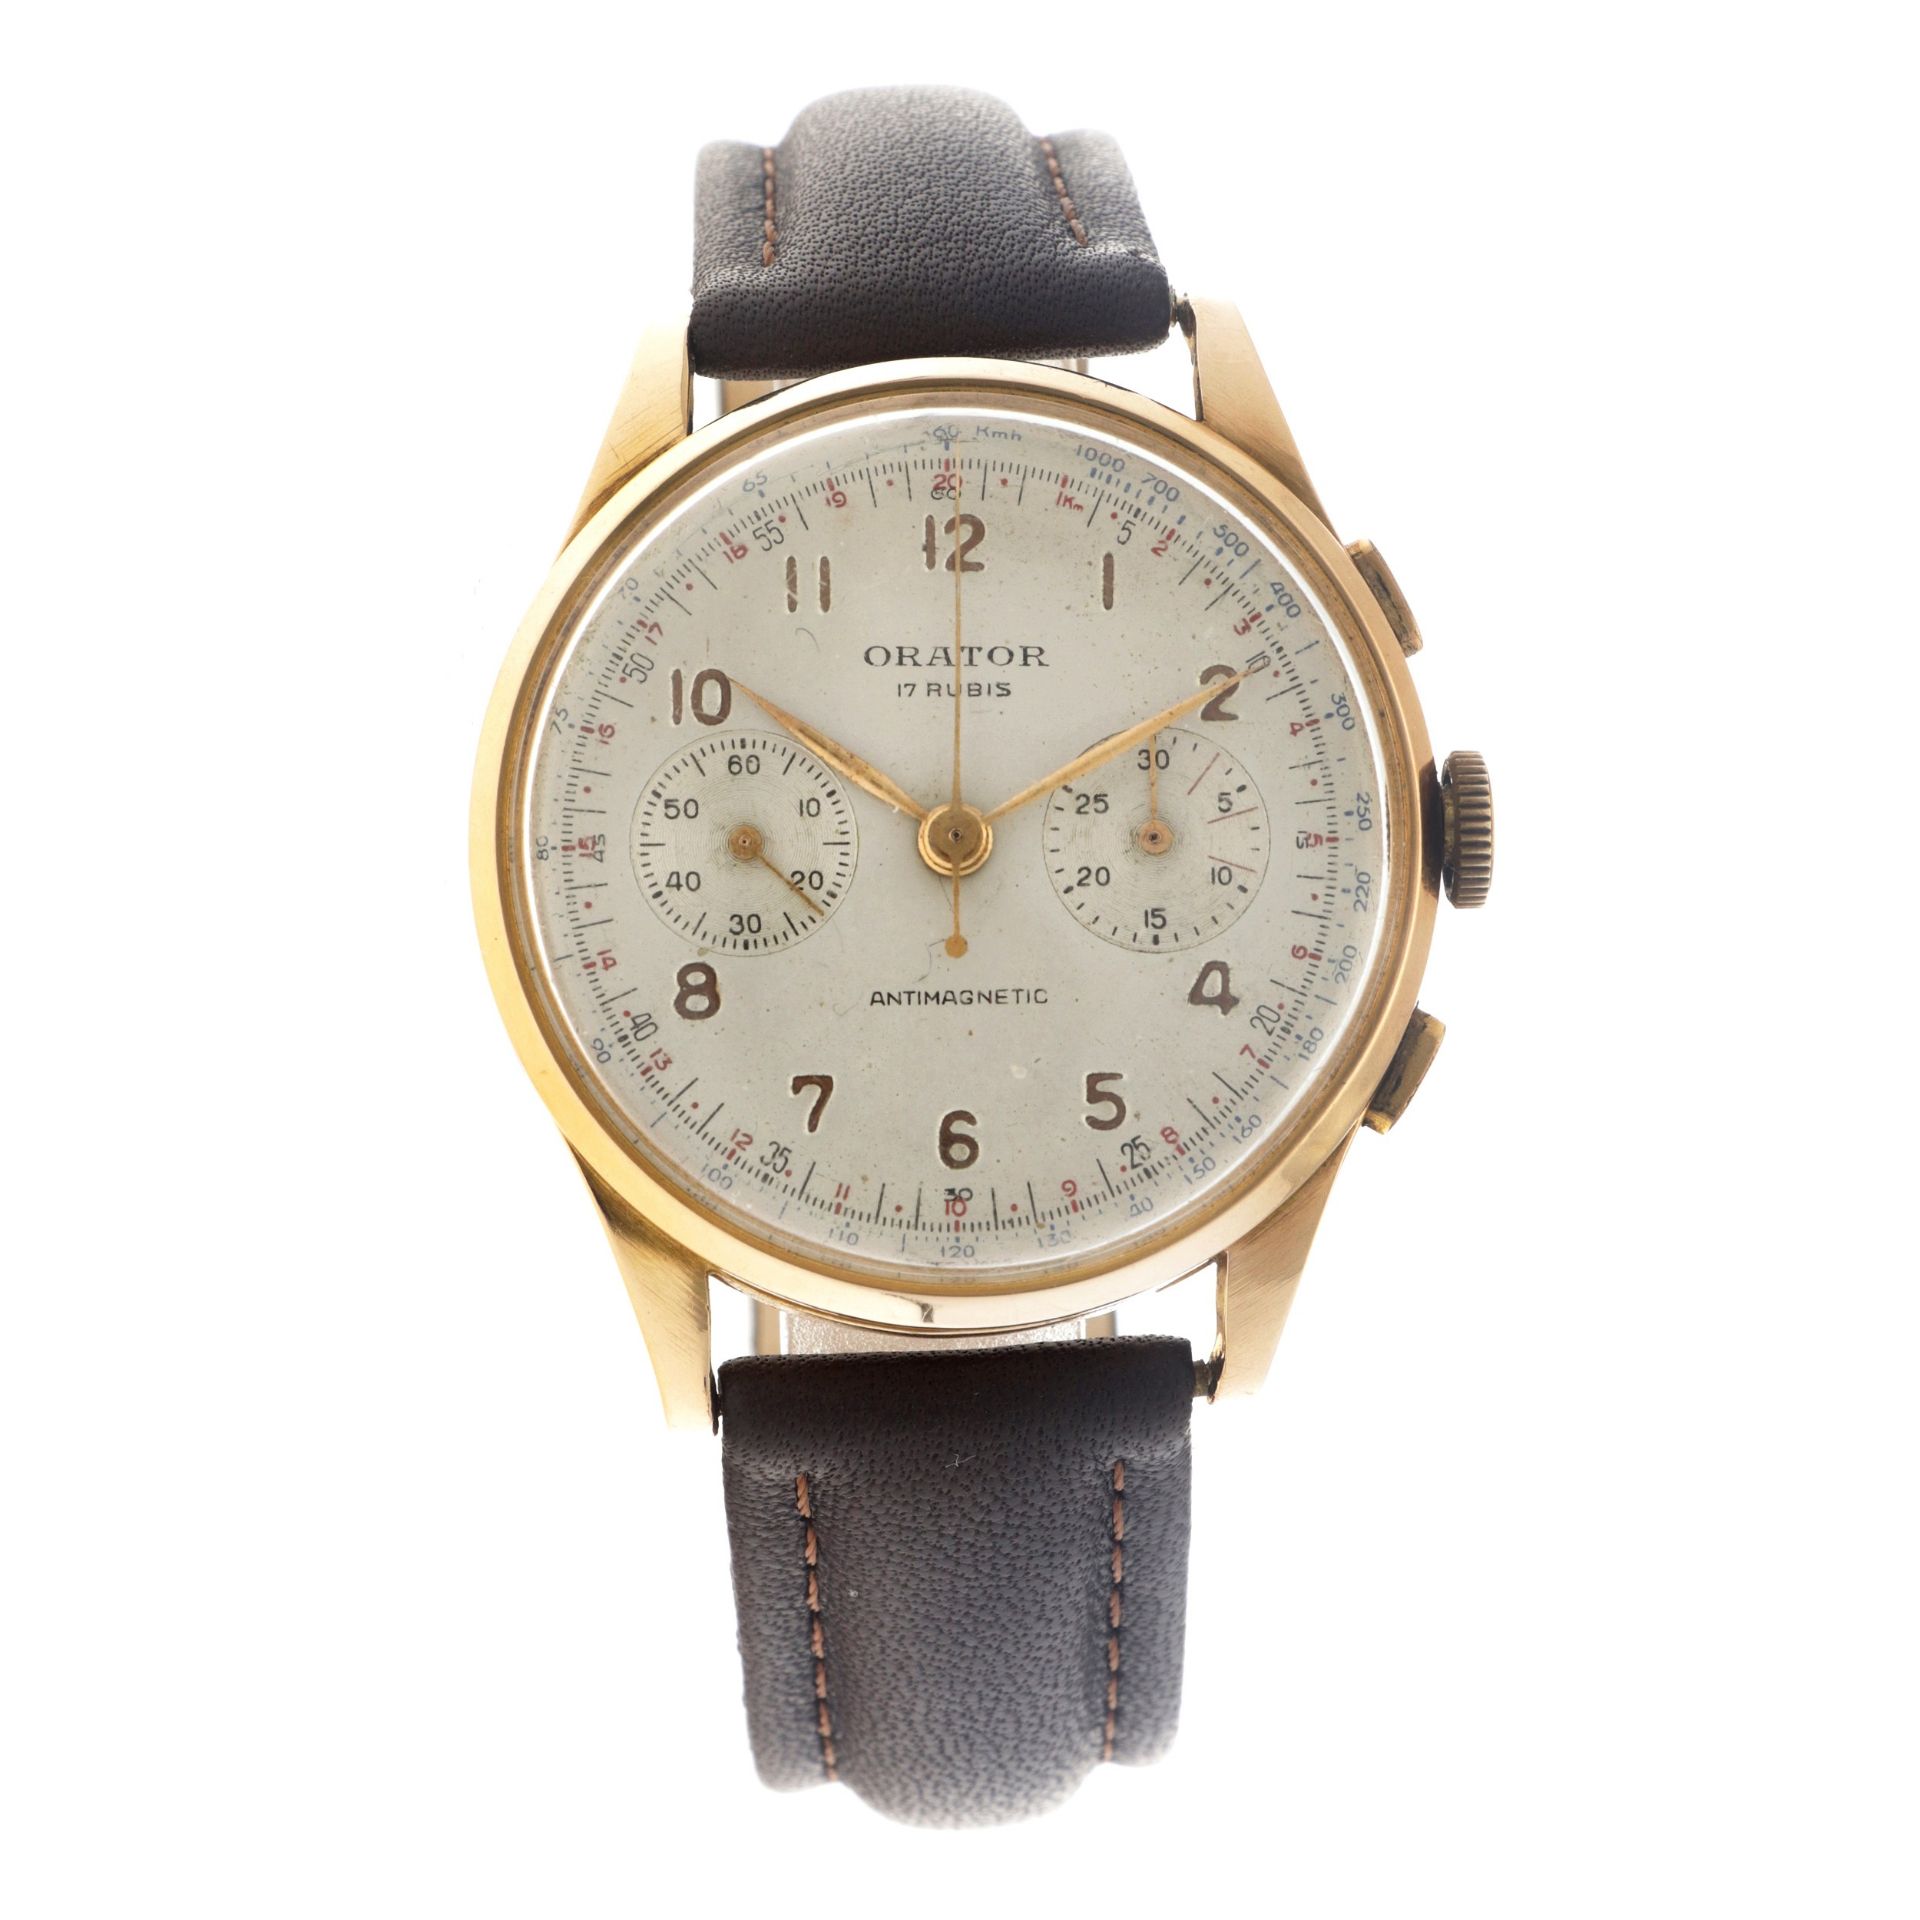 No Reserve - Orator Chronograph Suisse - Men's watch.